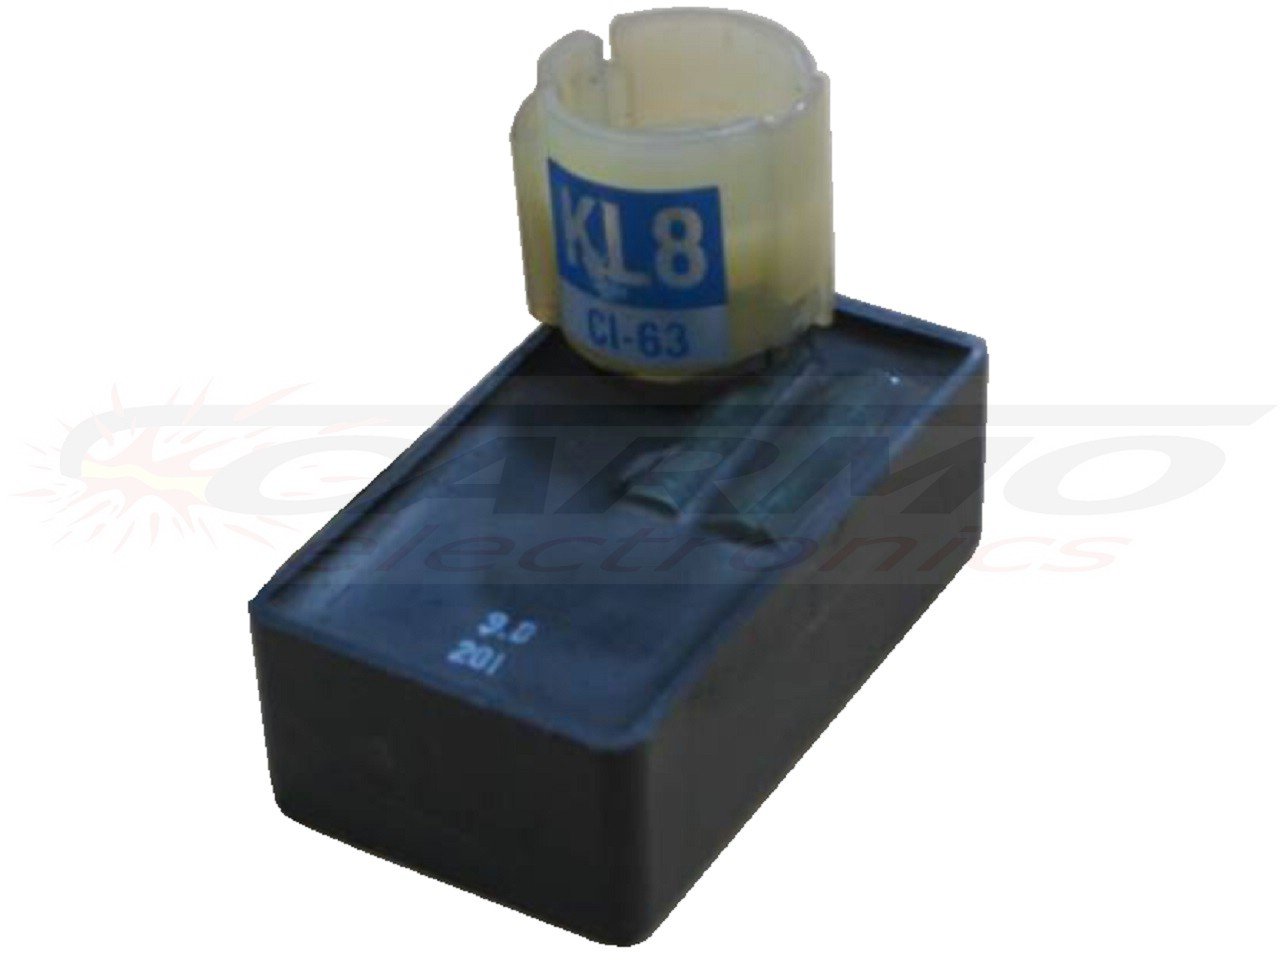 GB250 CB250 Clubman igniter ignition module CDI TCI Box (KL8, CI-63)